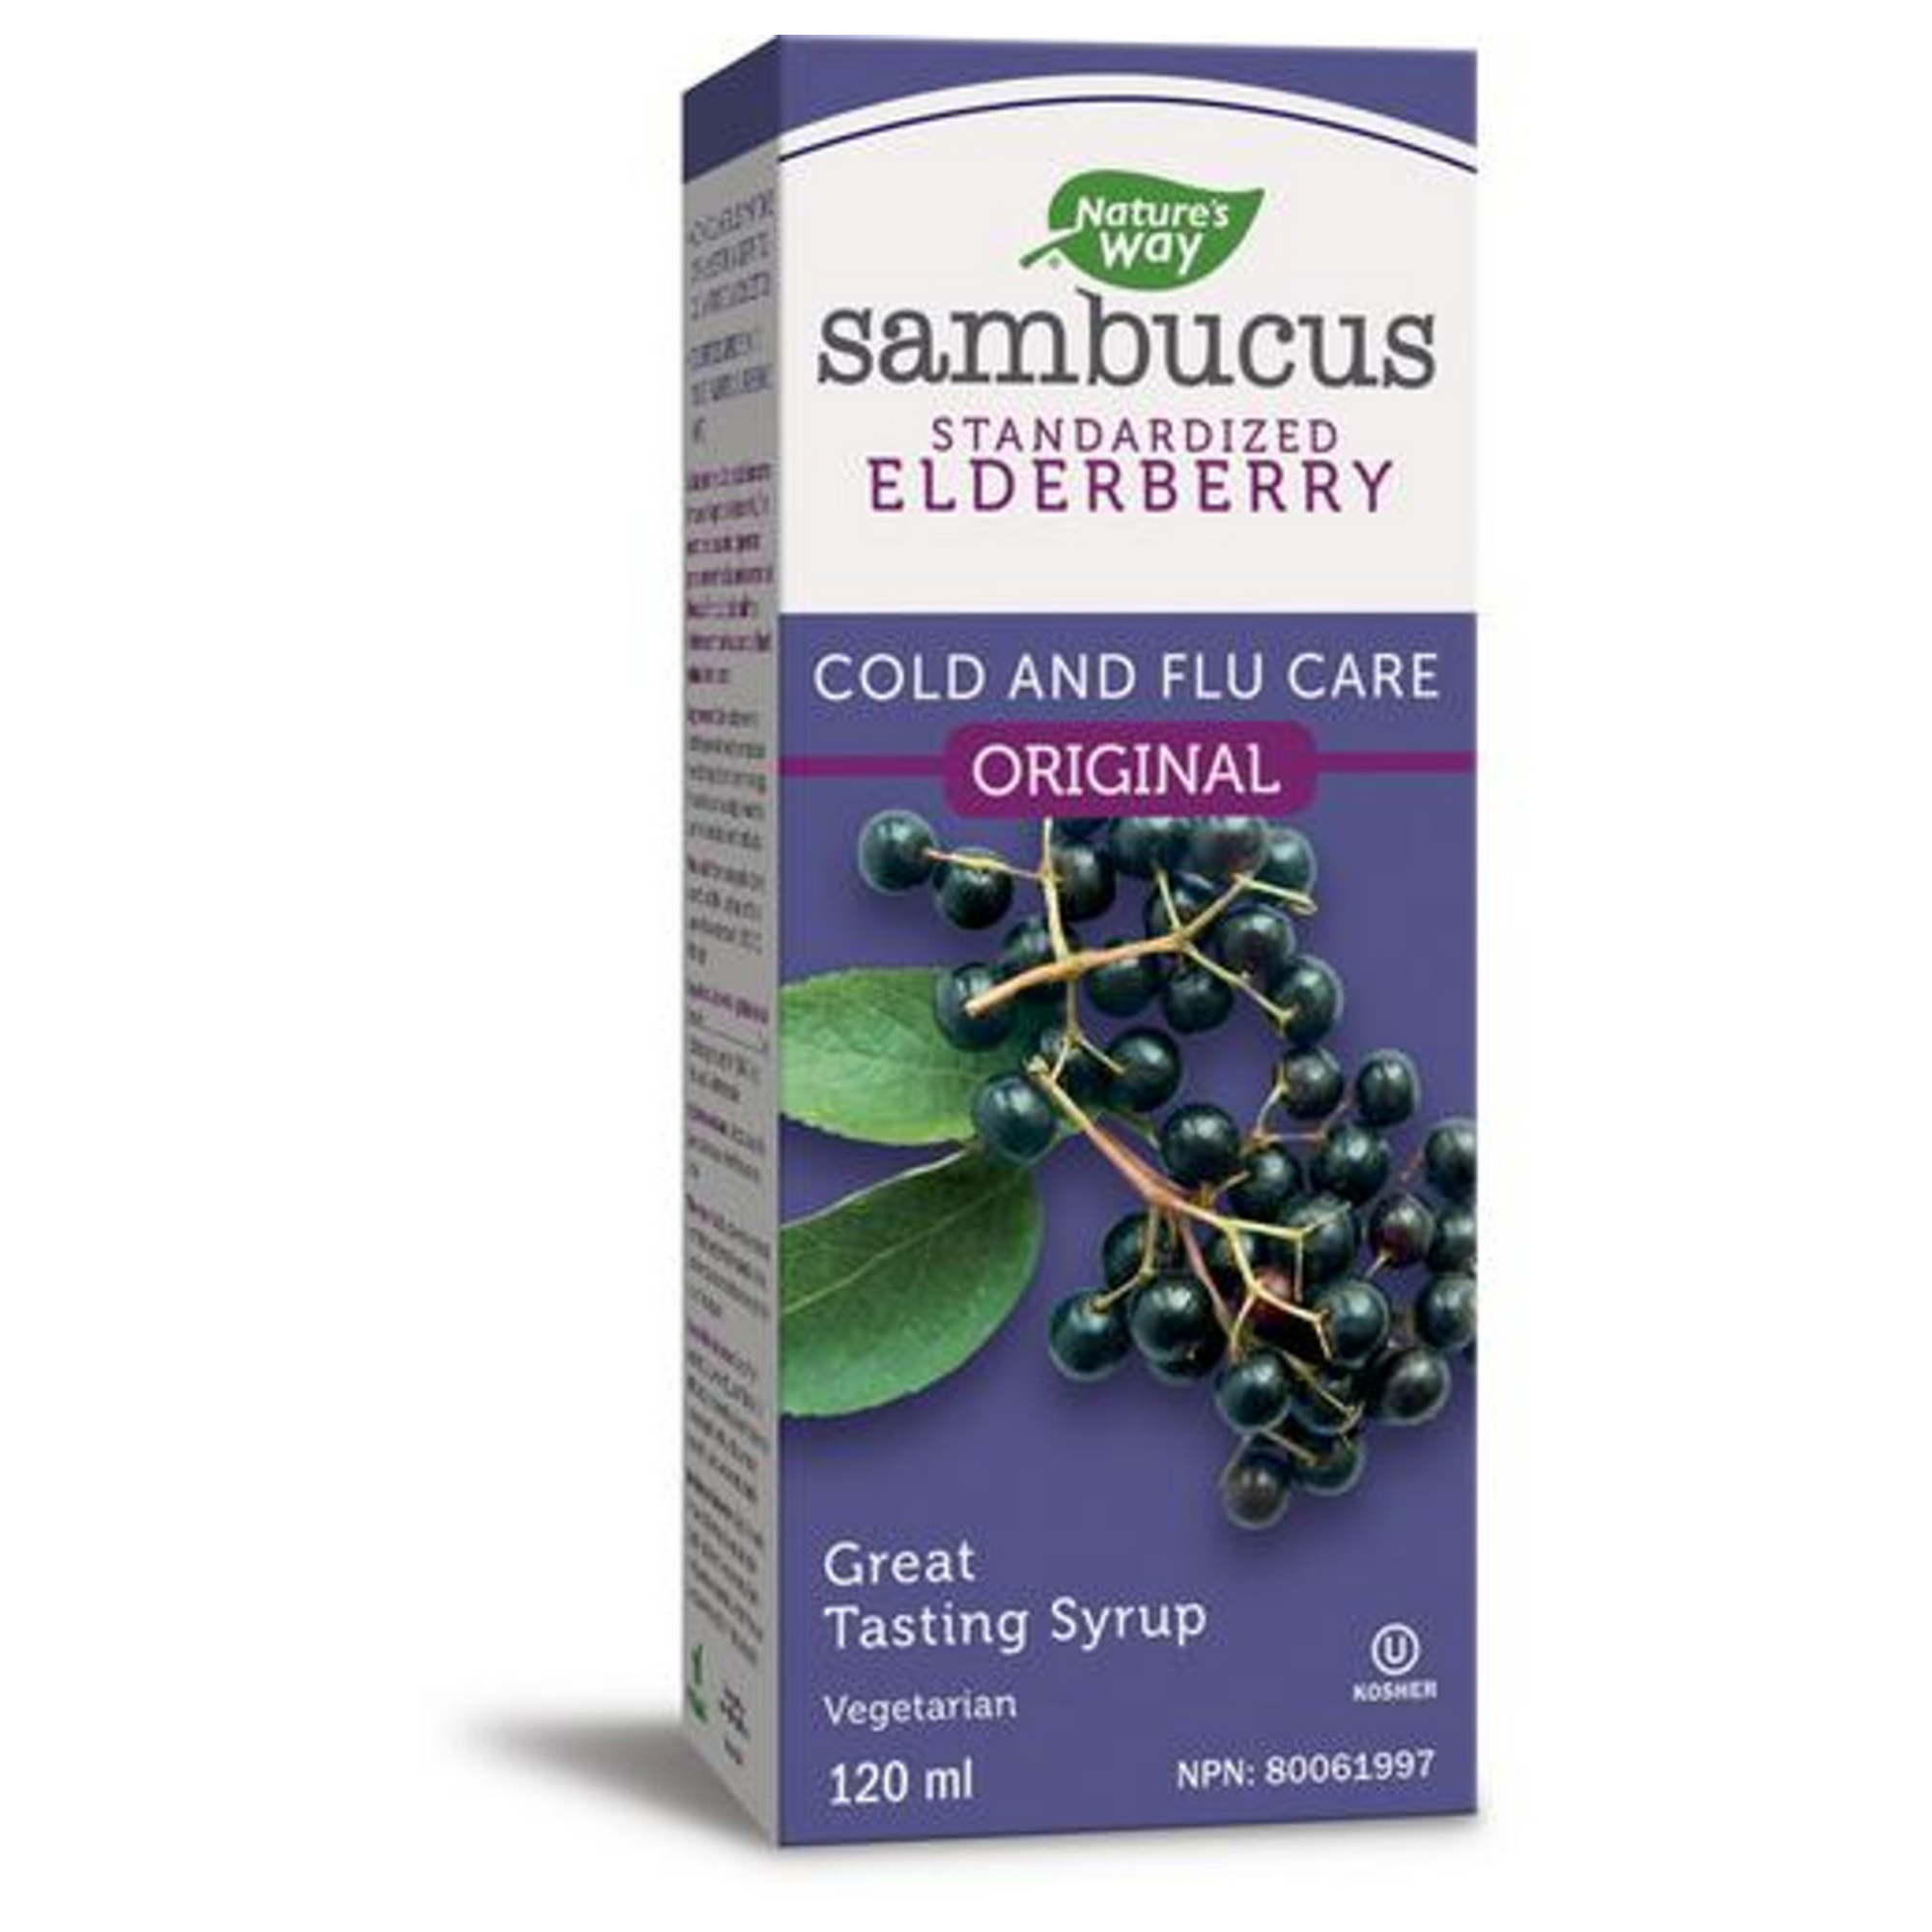 Nature's Way Original Sambucus Cold and Flu Care Syrup 120ml